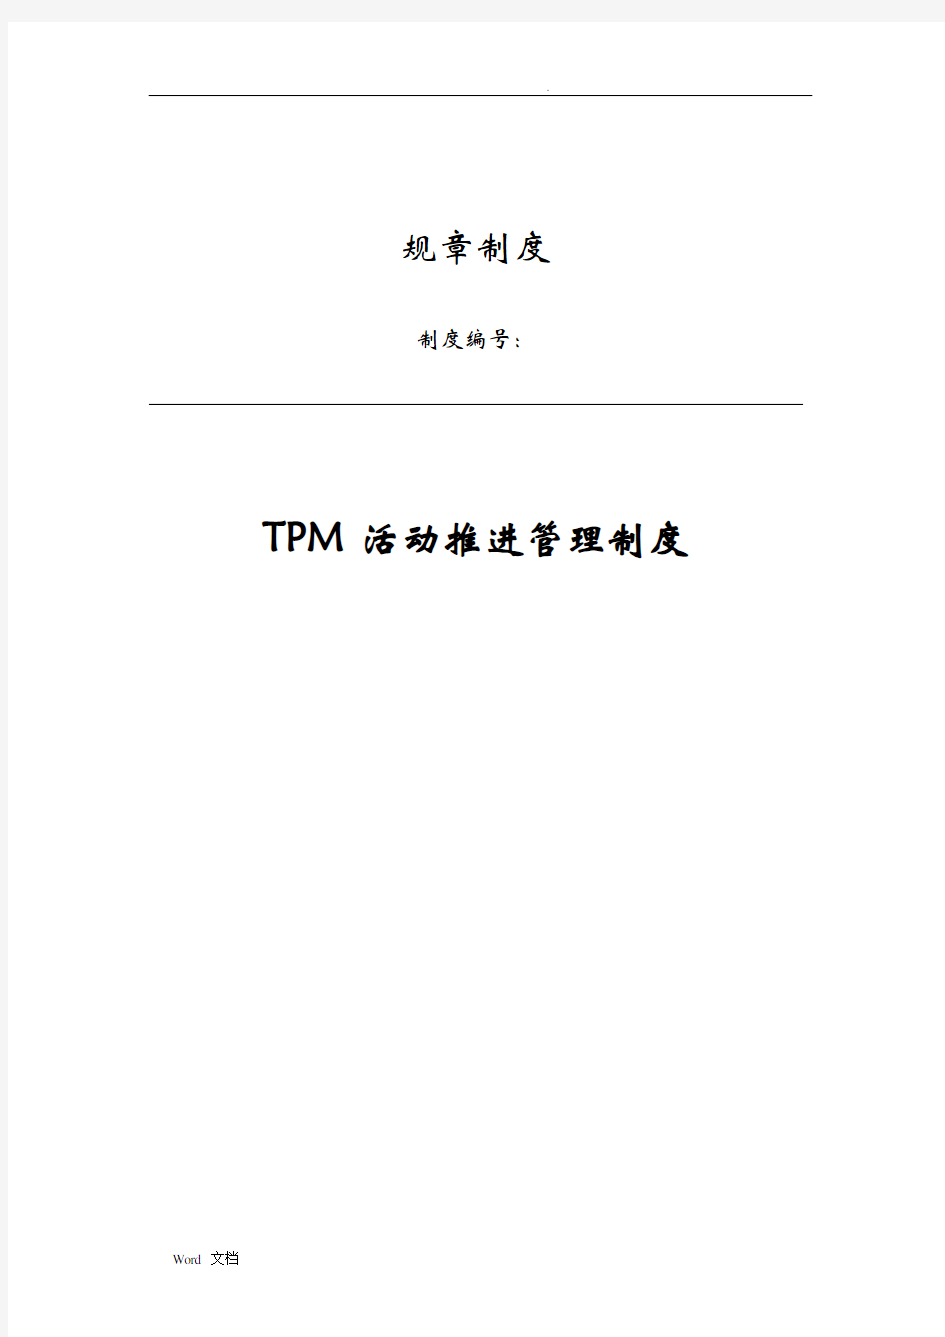 TPM活动推进管理制度